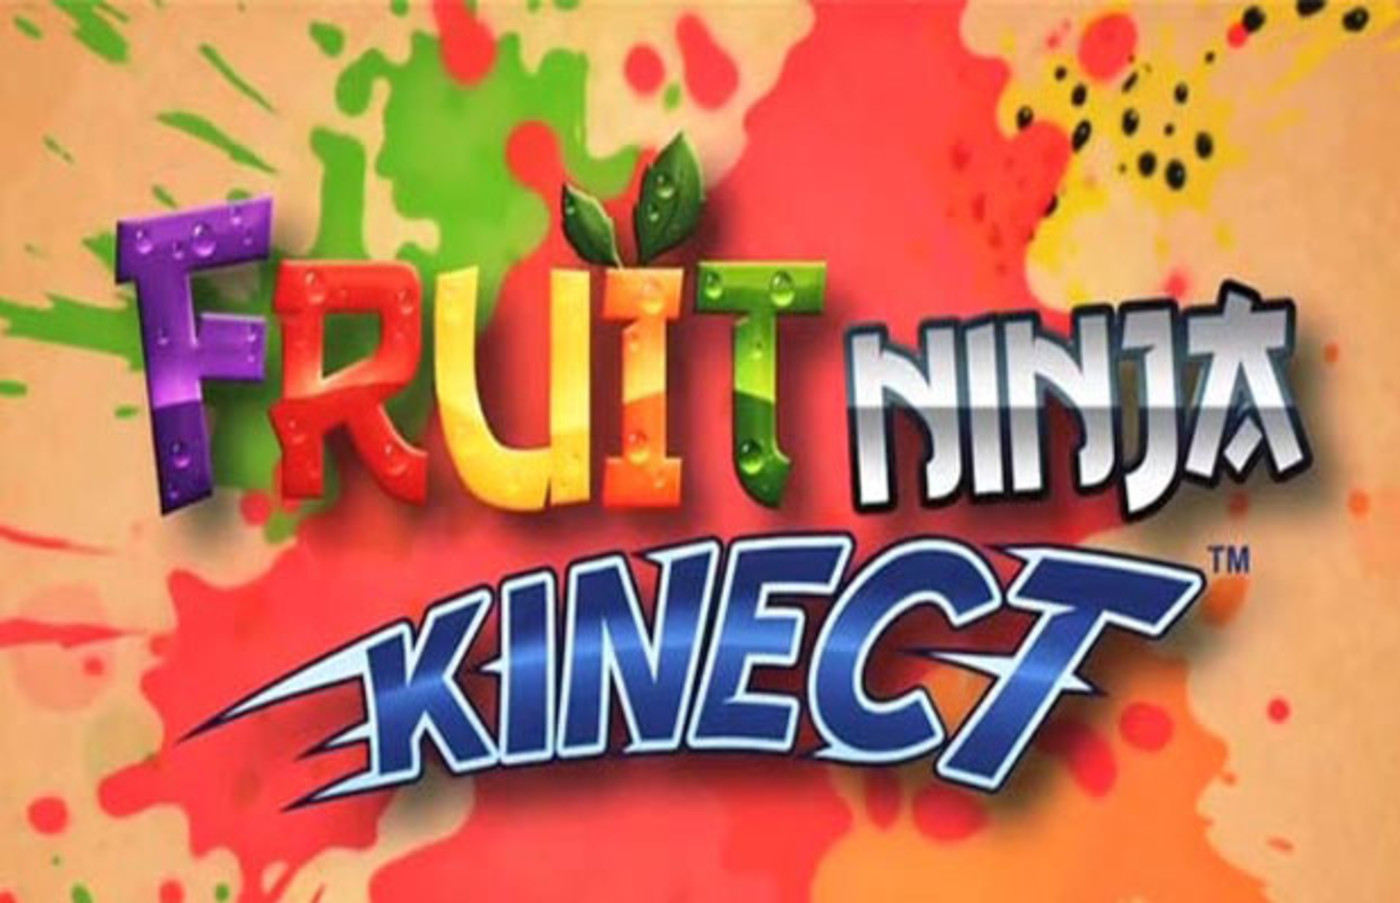 fruit ninja xbox 360 gamestop